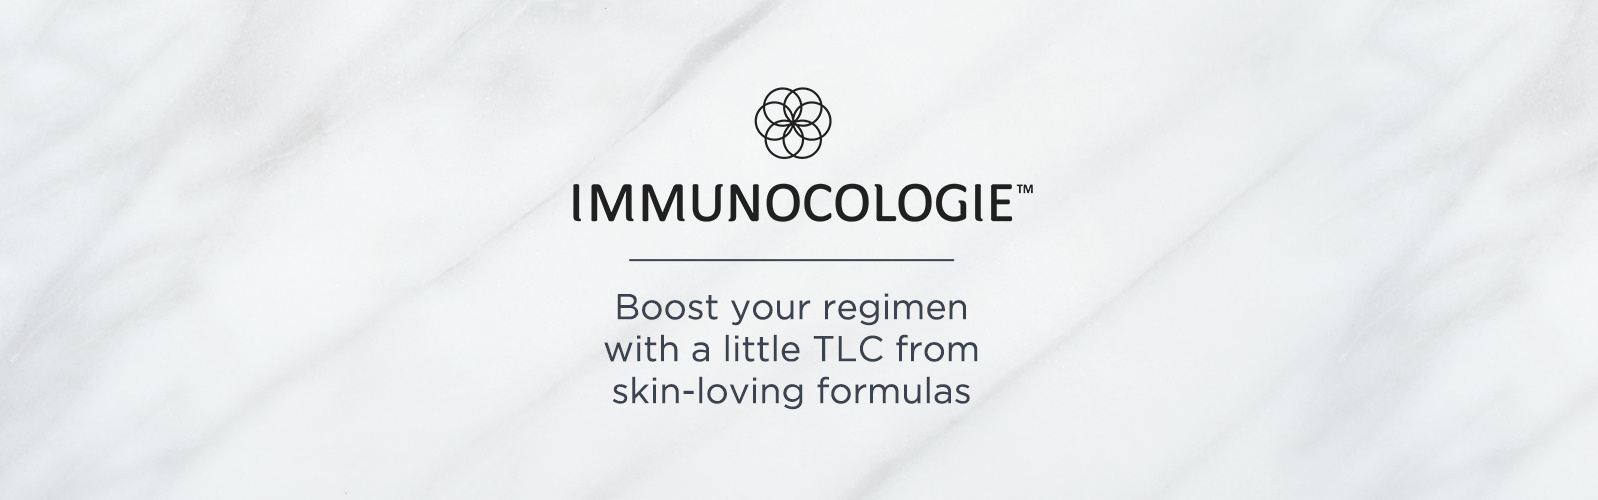 Immunocologie. Boost your regimen with a little TLC from skin-loving formulas